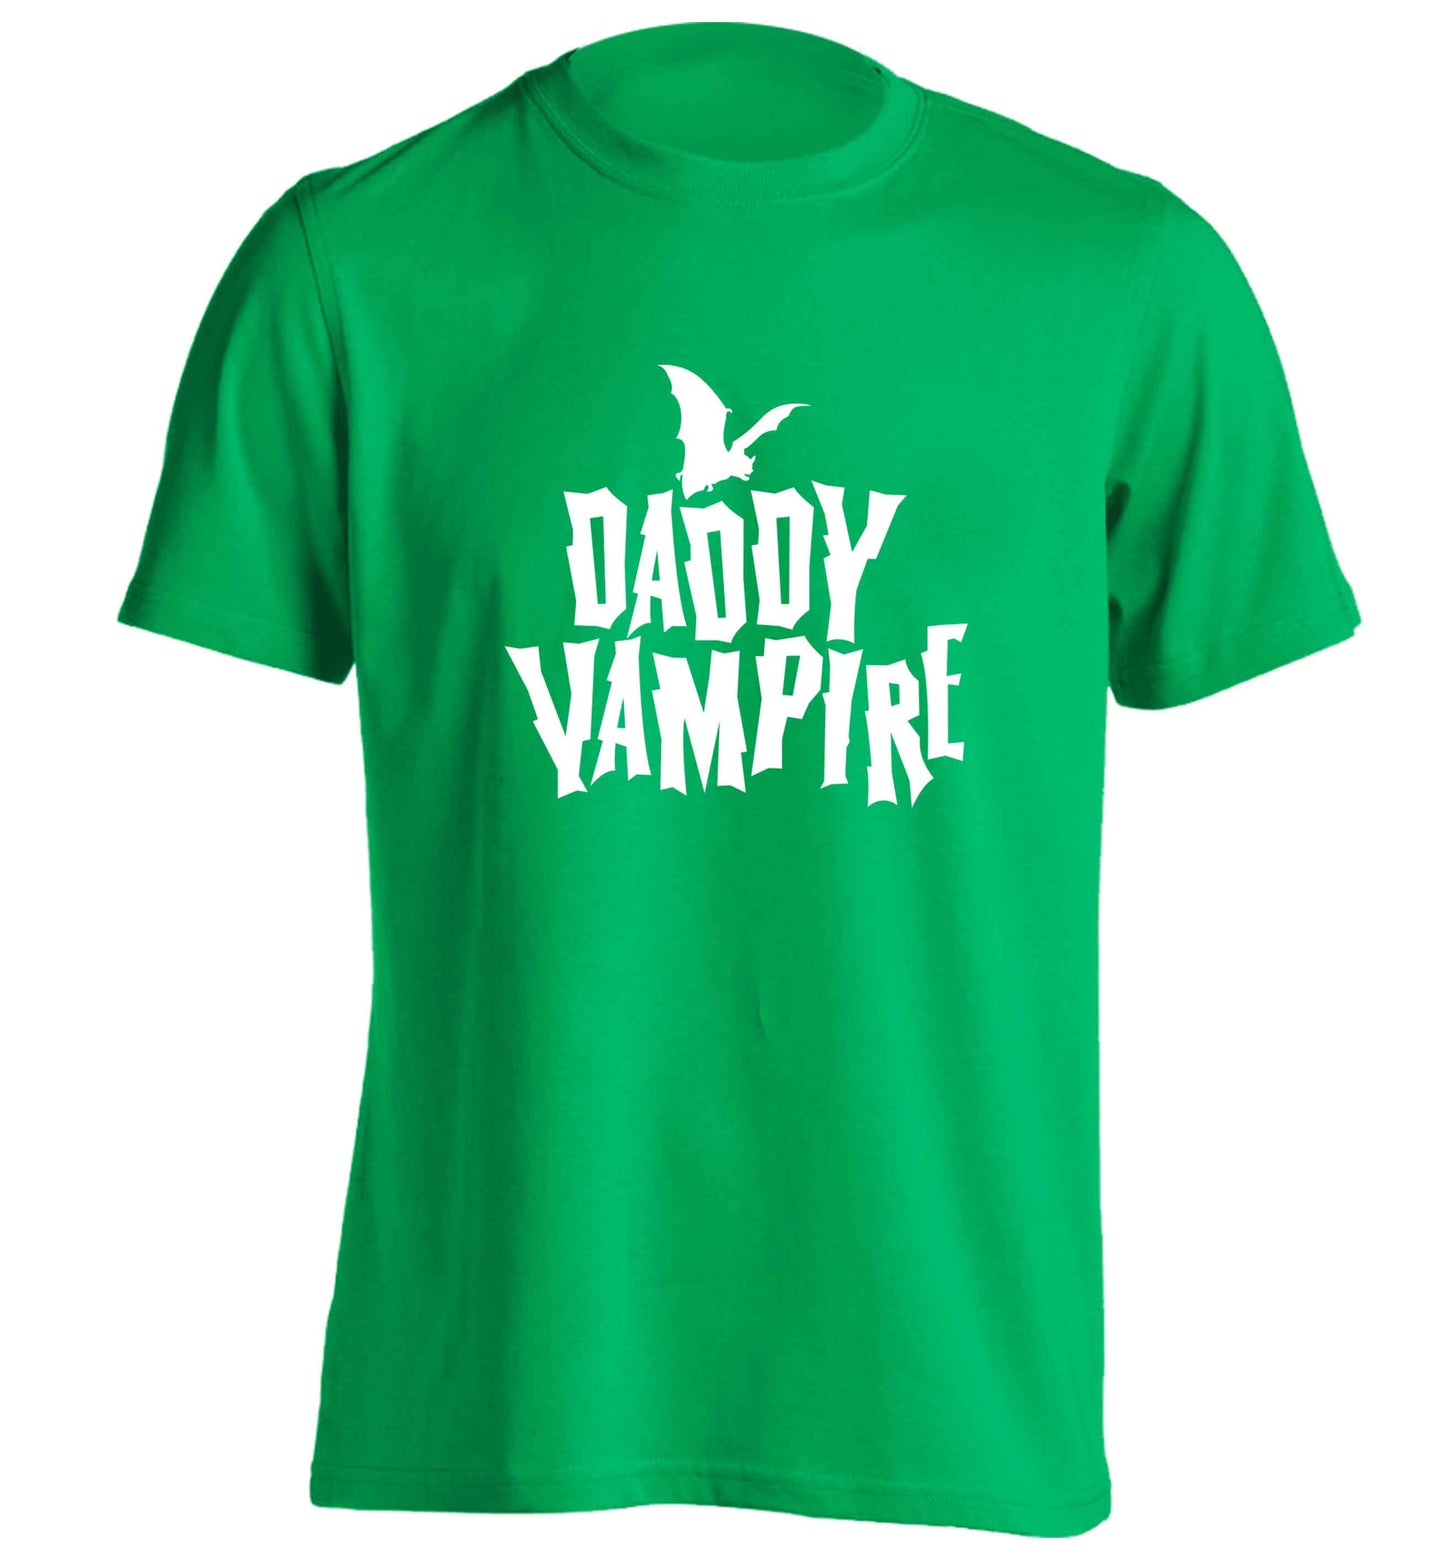 Daddy vampire adults unisex green Tshirt 2XL